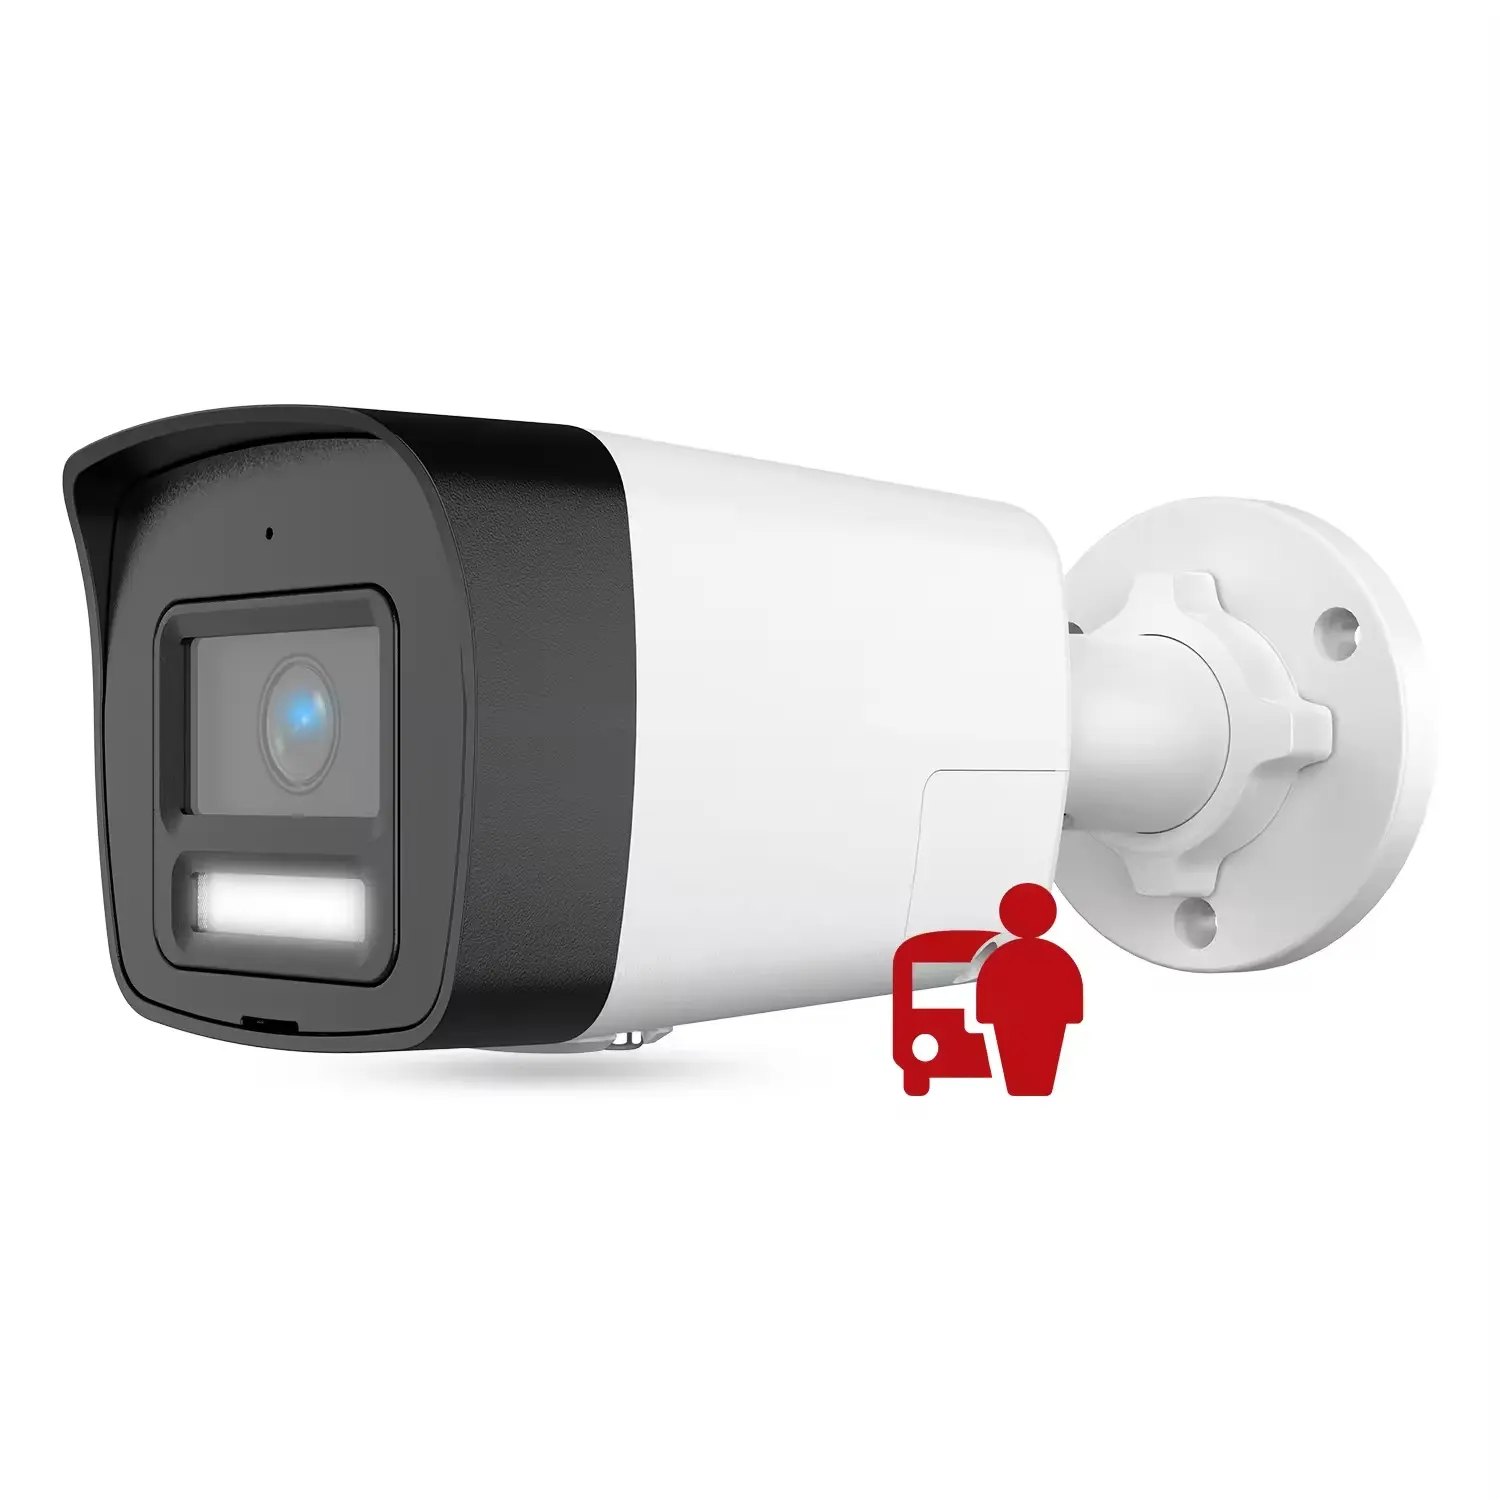 HK 4K 8MP IP Kamera CCTV Bullet POE vollfarbig Dual-Light Nachtsicht Mensch/Fahrzeug-Detektion Unterstützung Audiokartenschlitz WDR